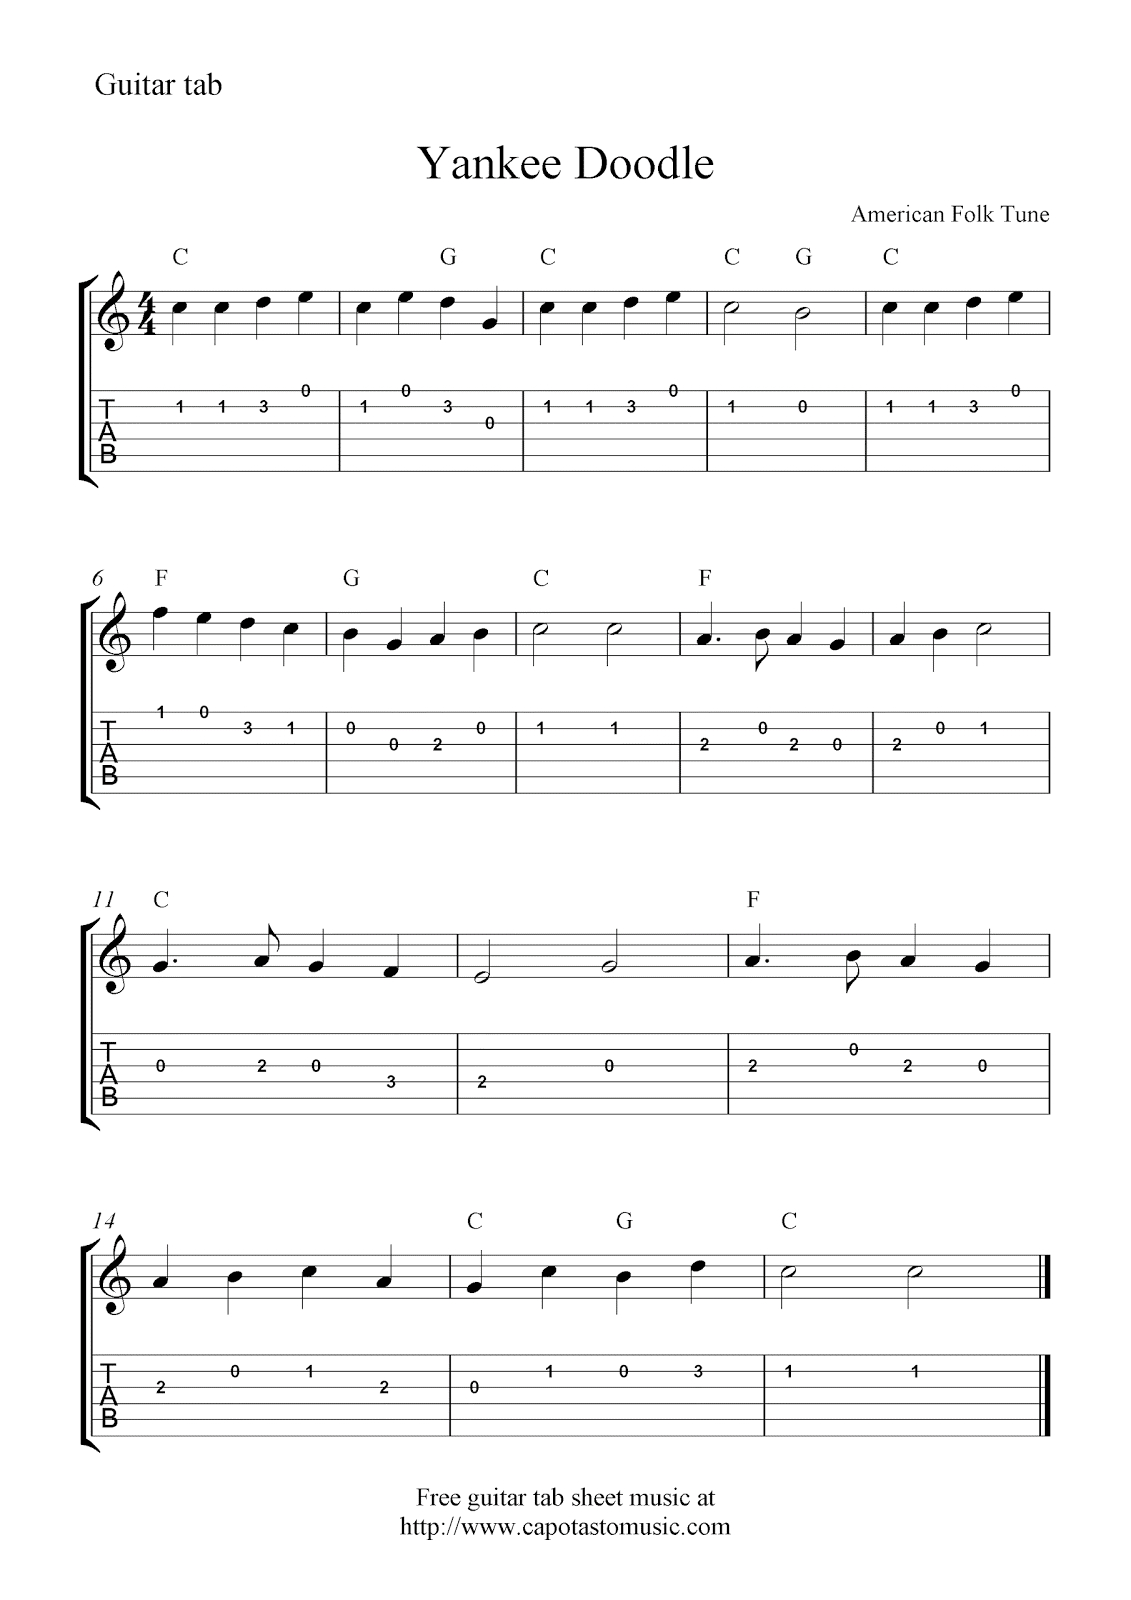 Yankee Doodle,easy Free Guitar Tab Sheet Music Score - Free Printable Guitar Music